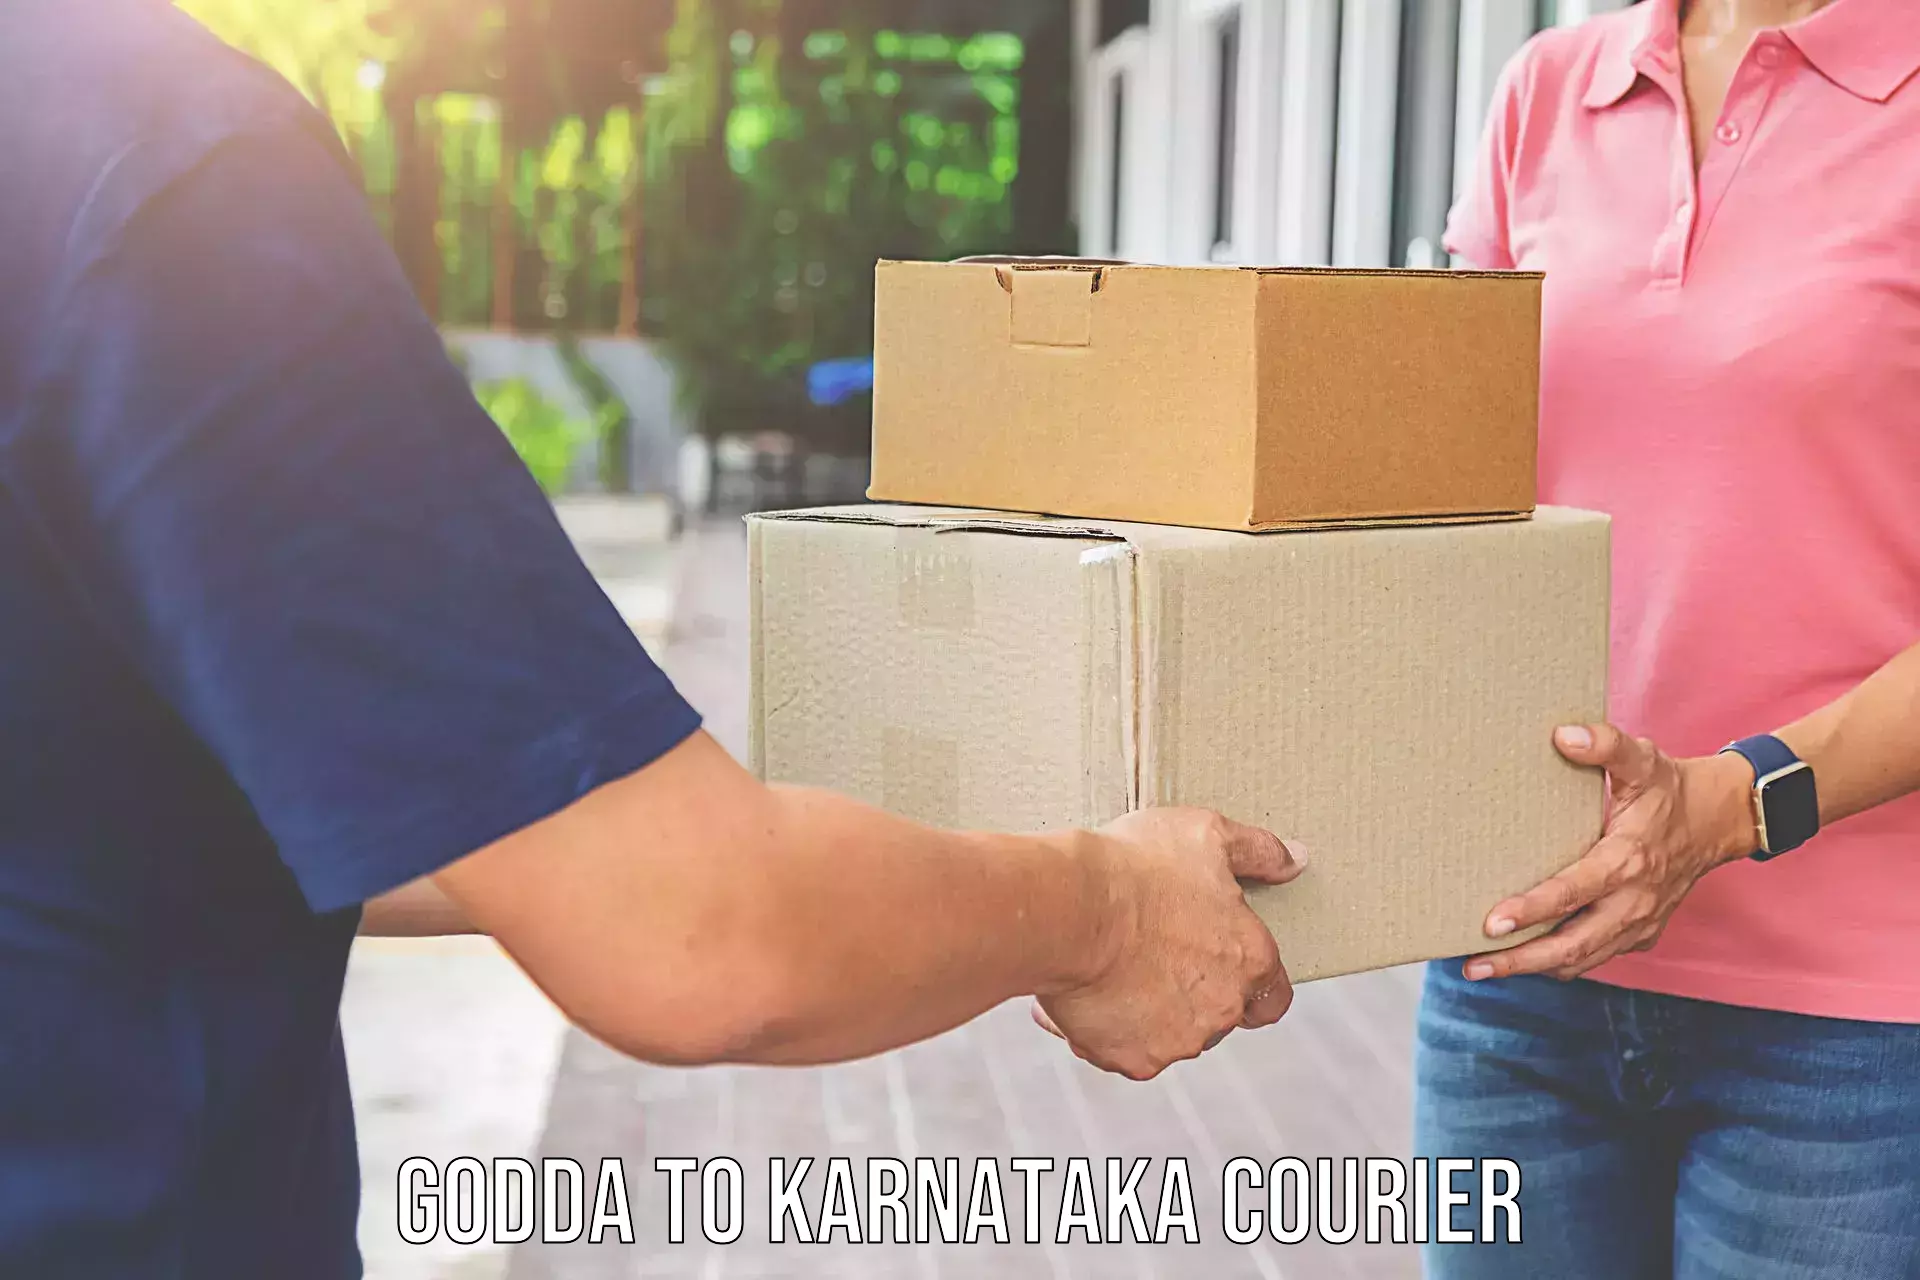 Furniture delivery service Godda to Channagiri